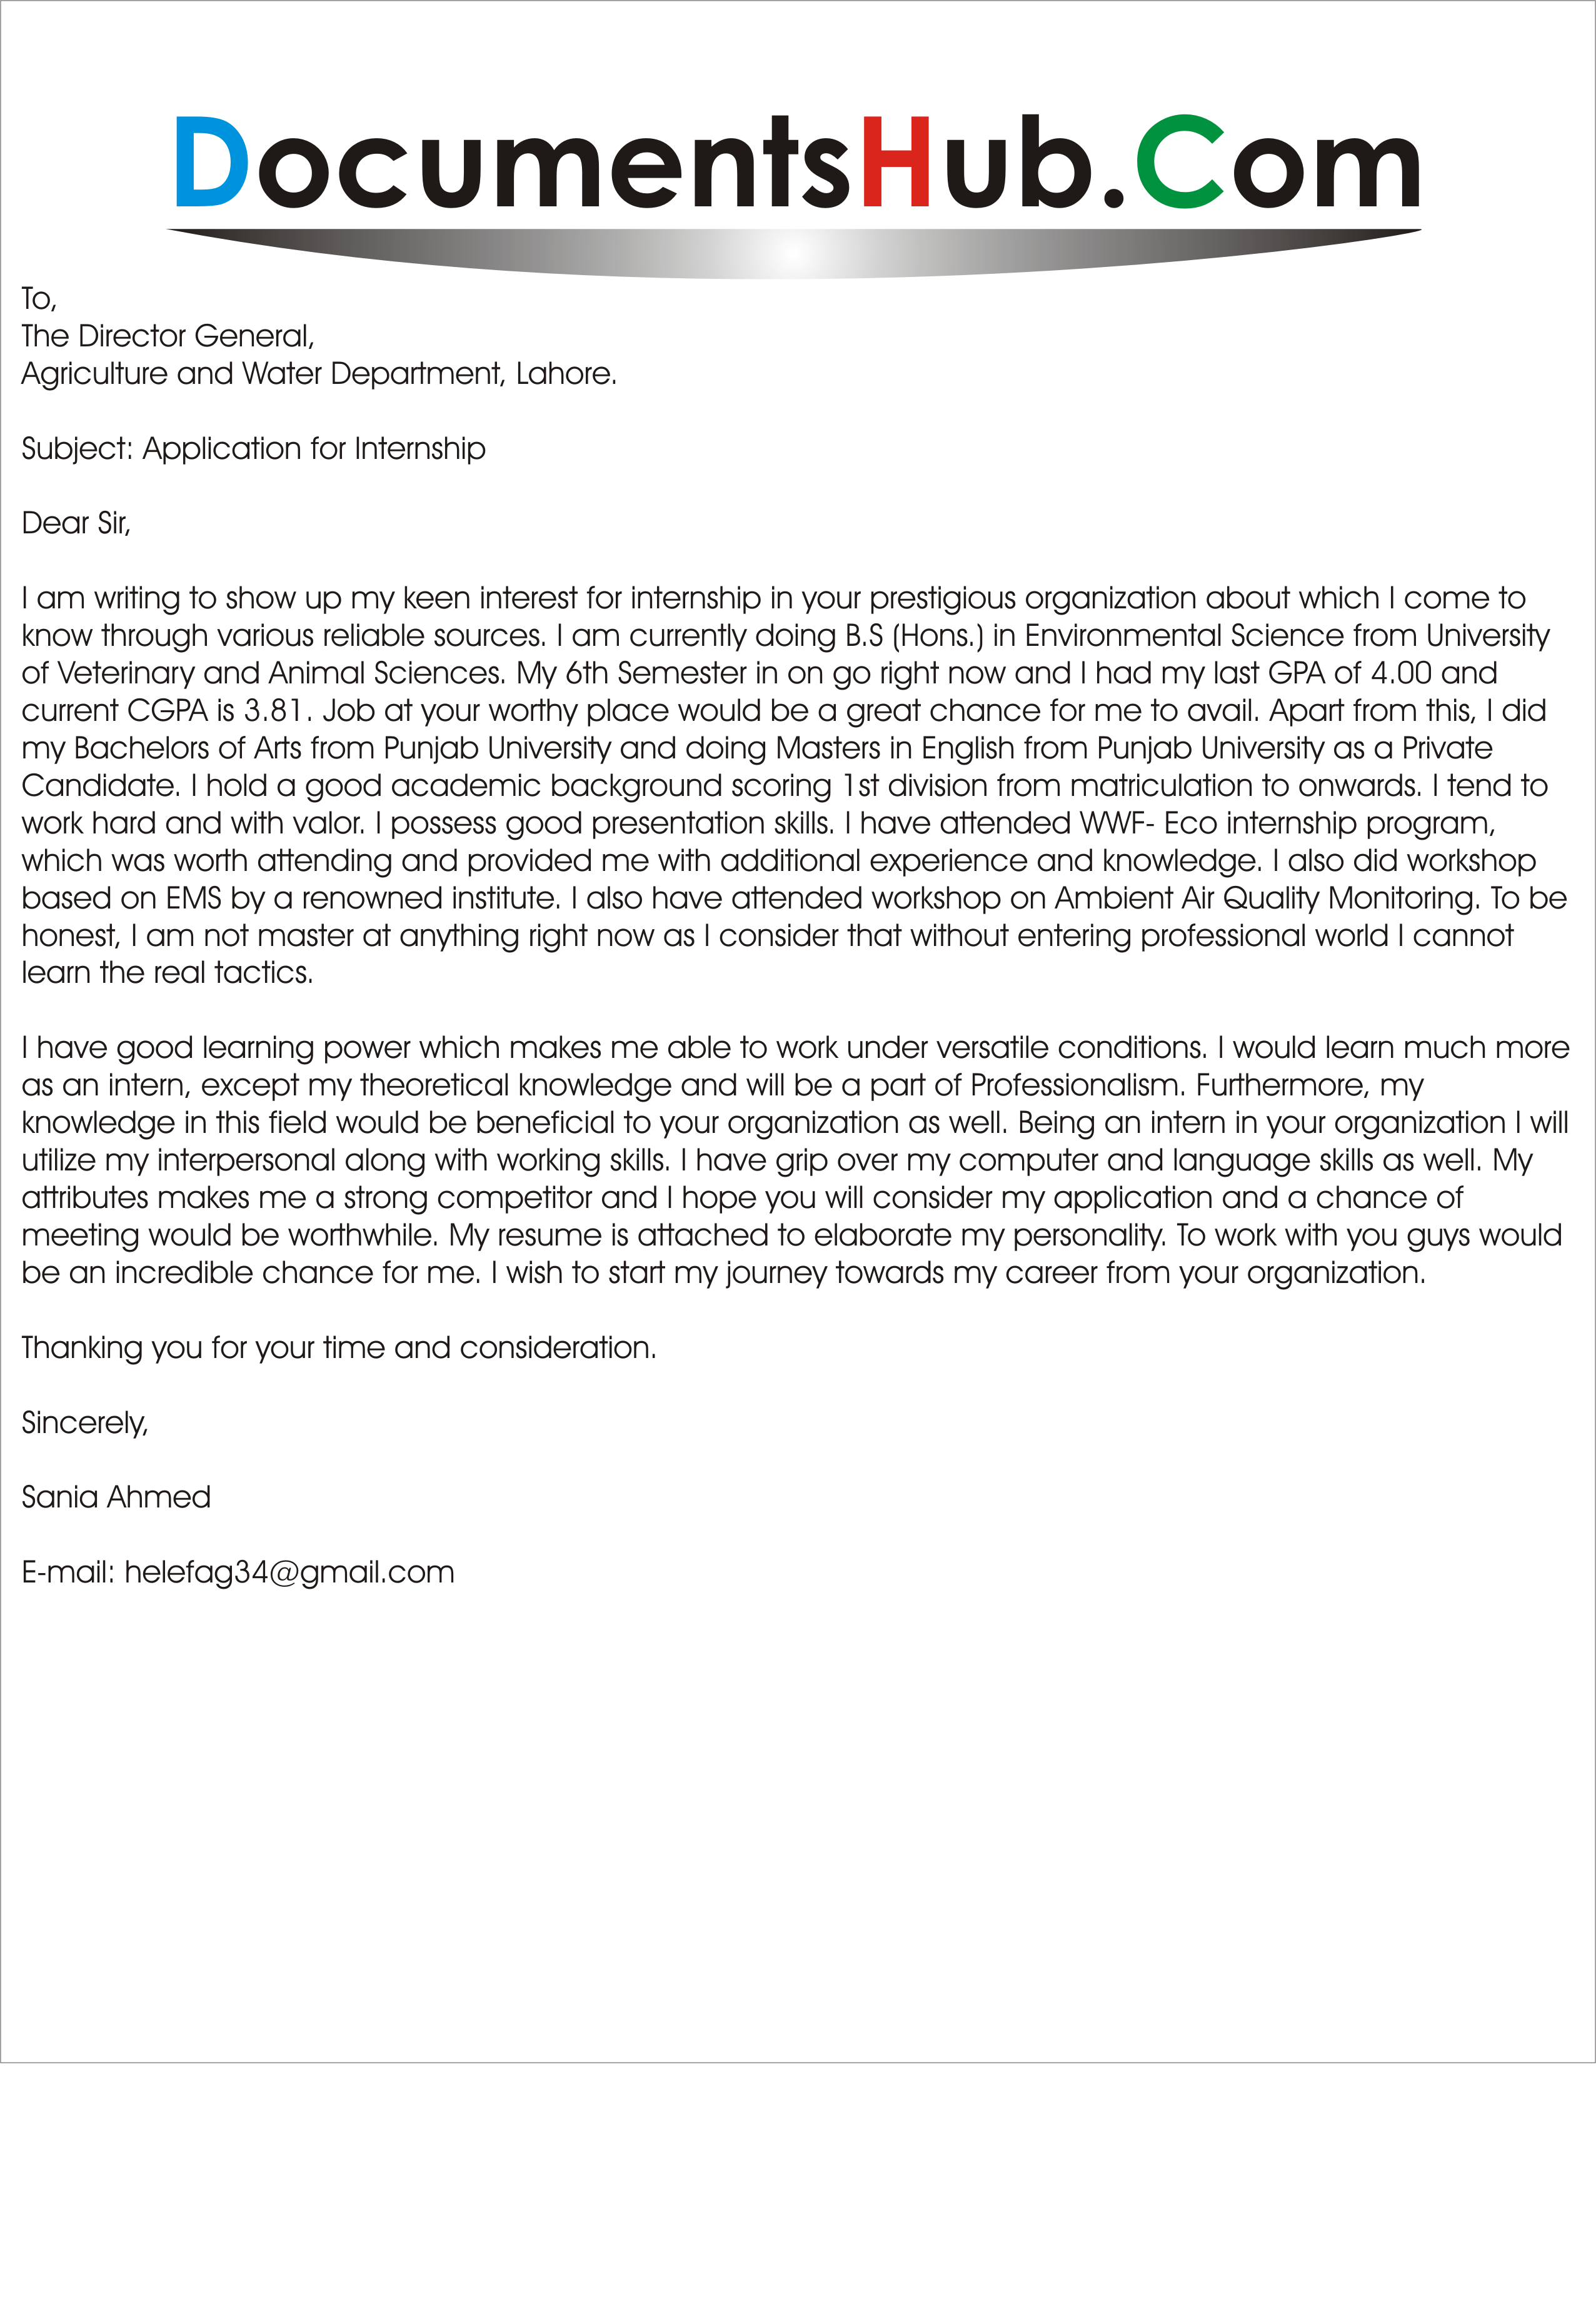 cover letter for environmental internship documentshub com